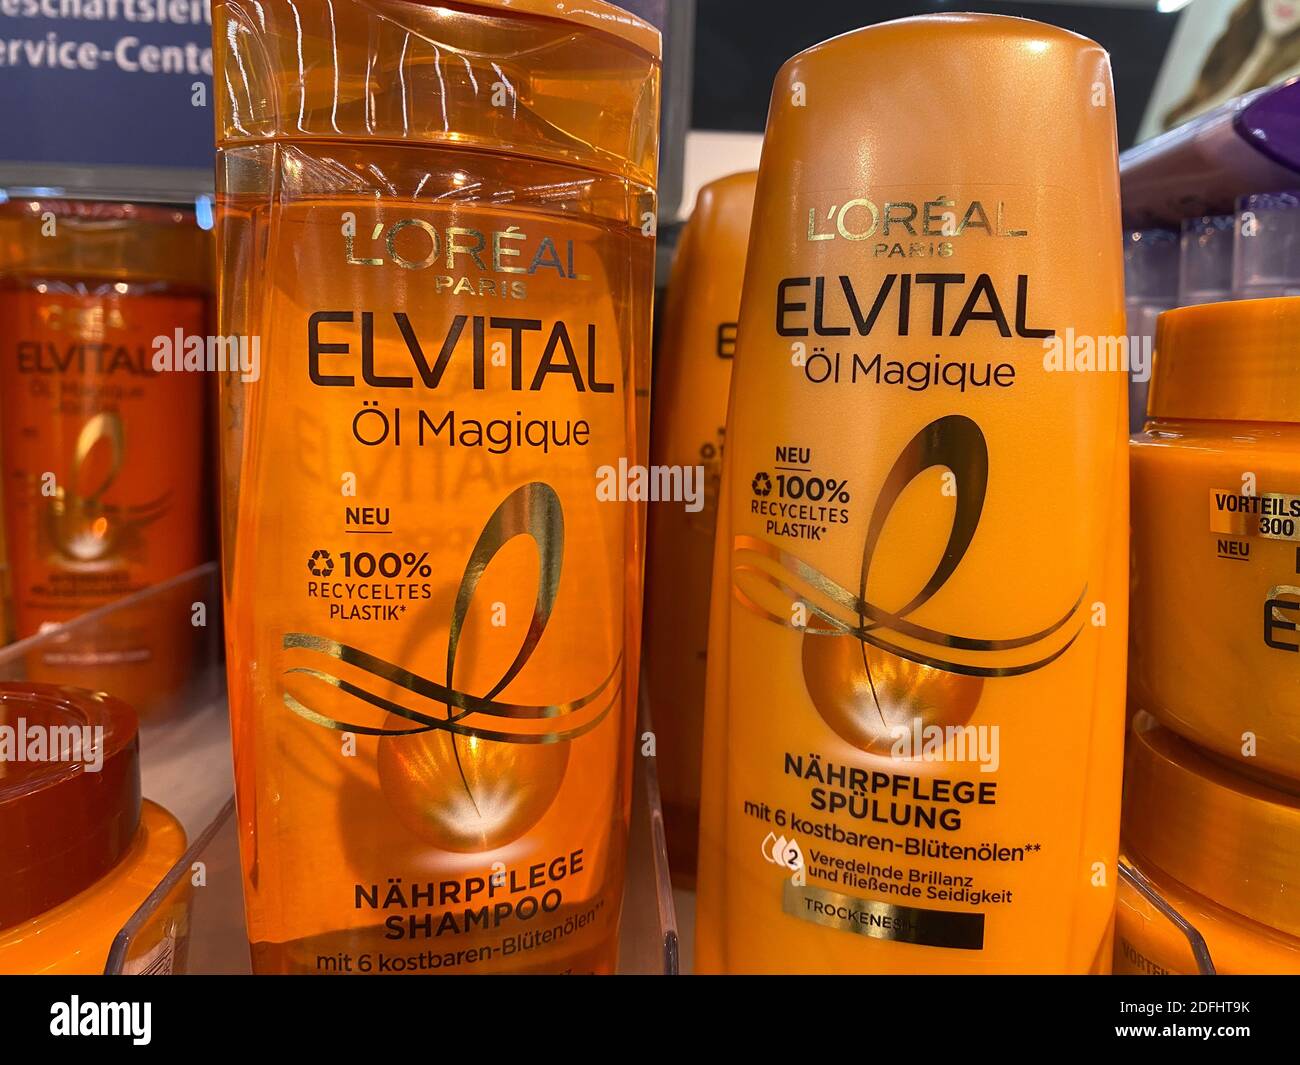 Viersen, Germany - May 9. 2020: Closeup of bottles loreal Elvital shampoo in shelf of german supermarket Stock Photo